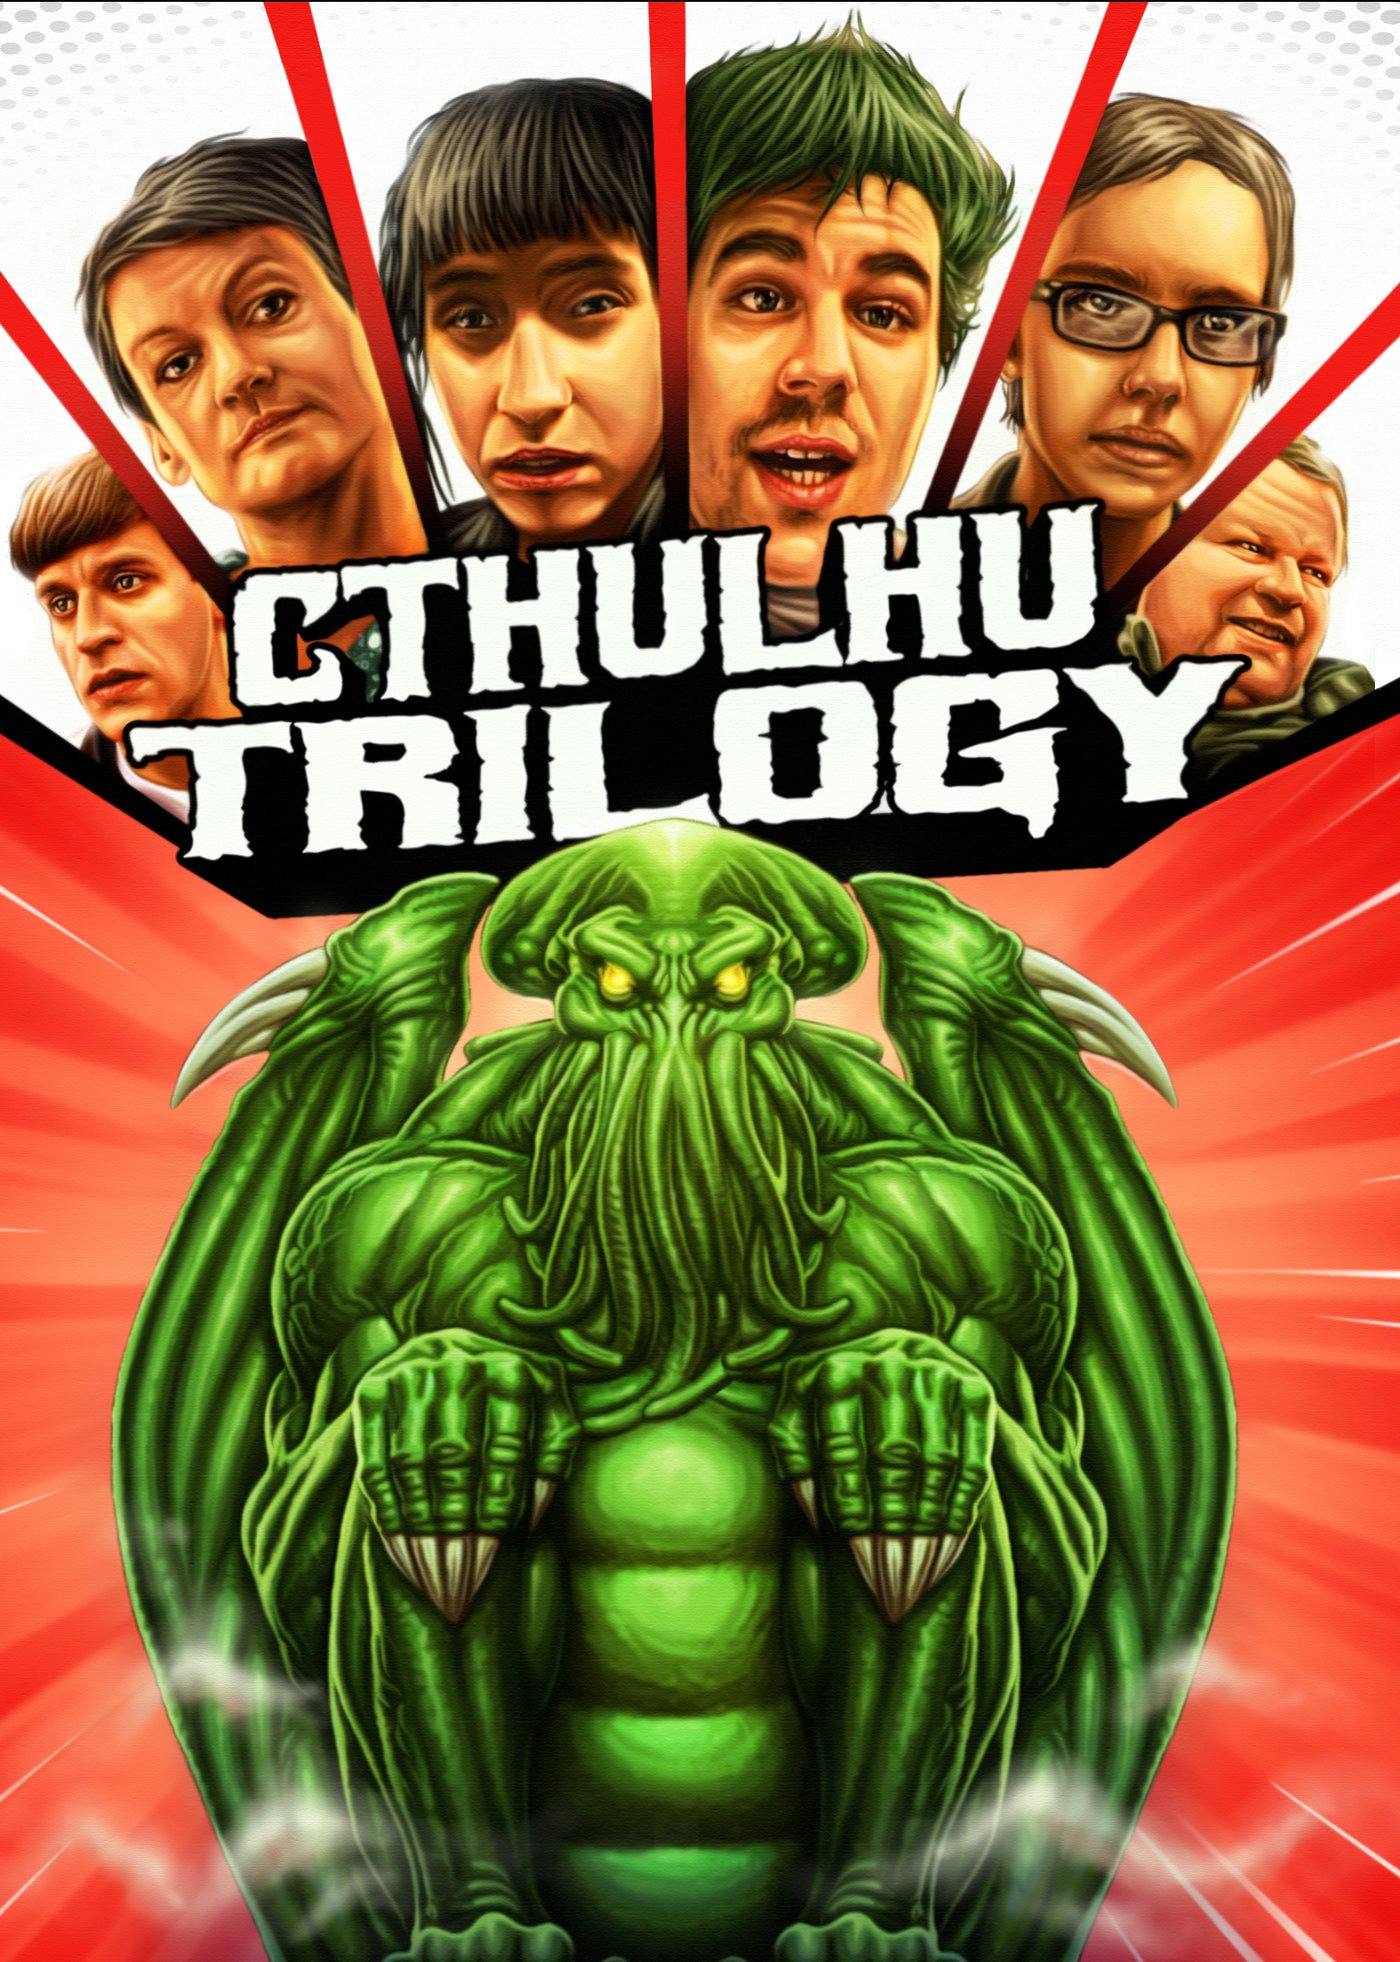 THE CTHULHU TRILOGY DVD